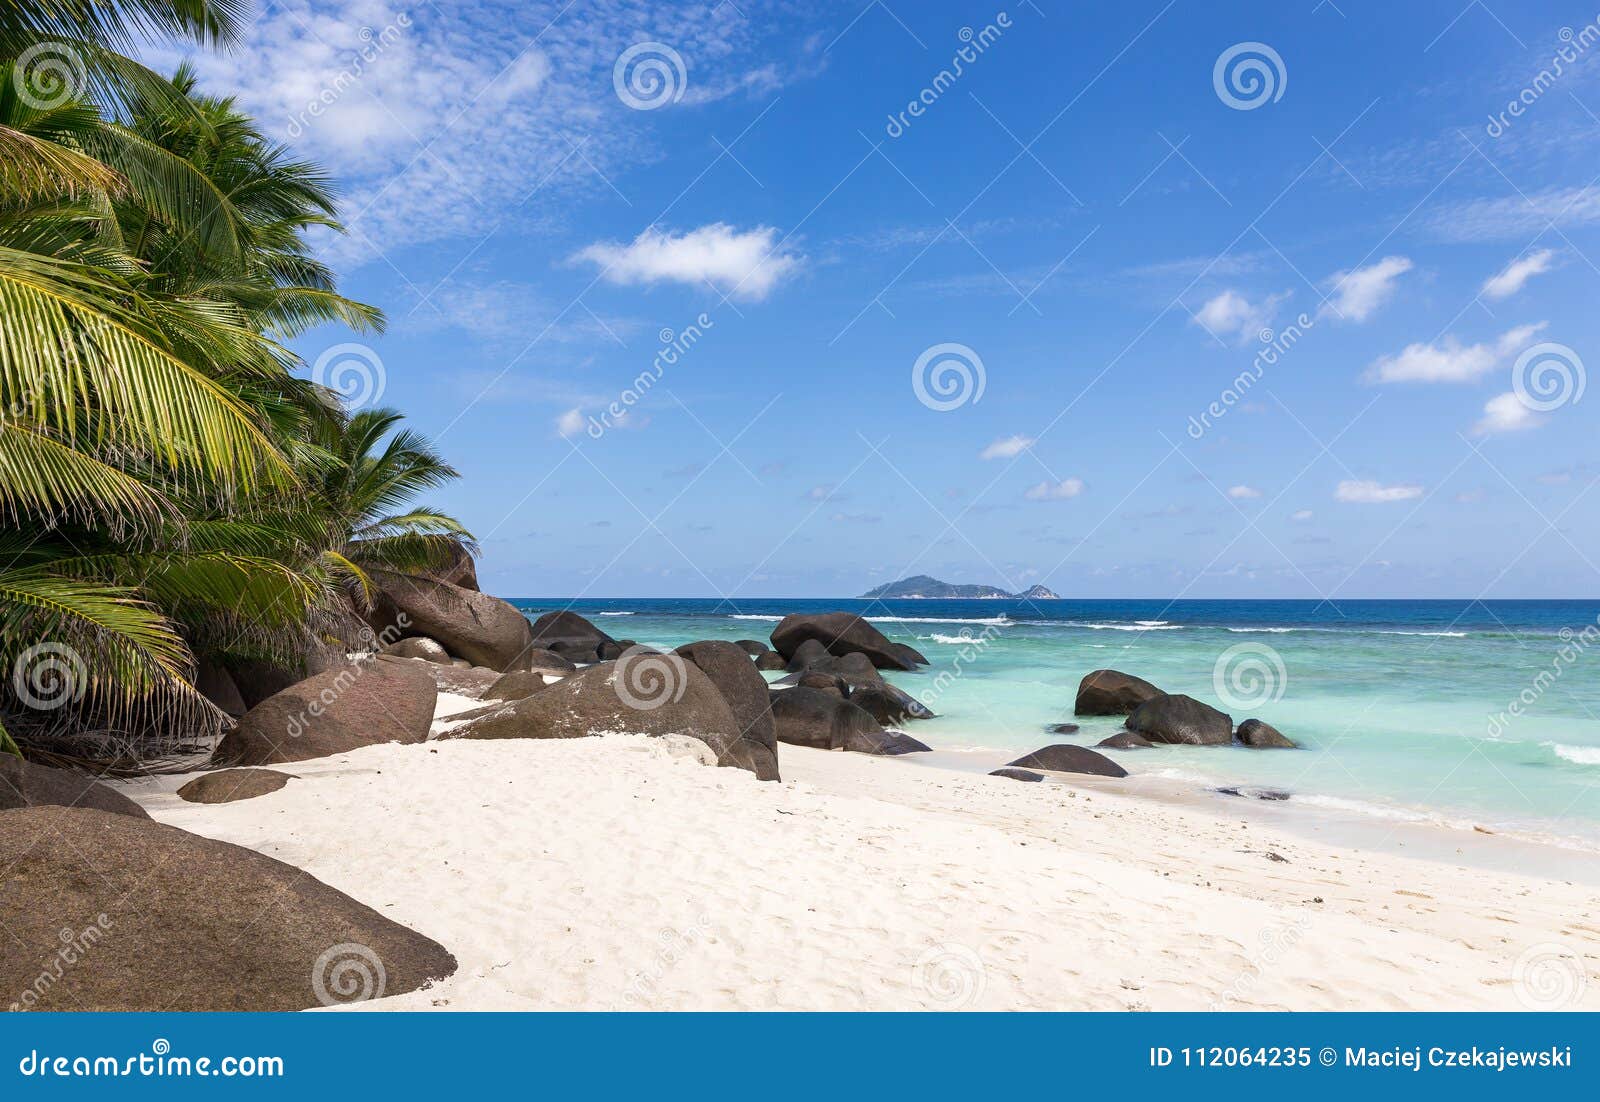 paradise beach on silhouette island, seychelles